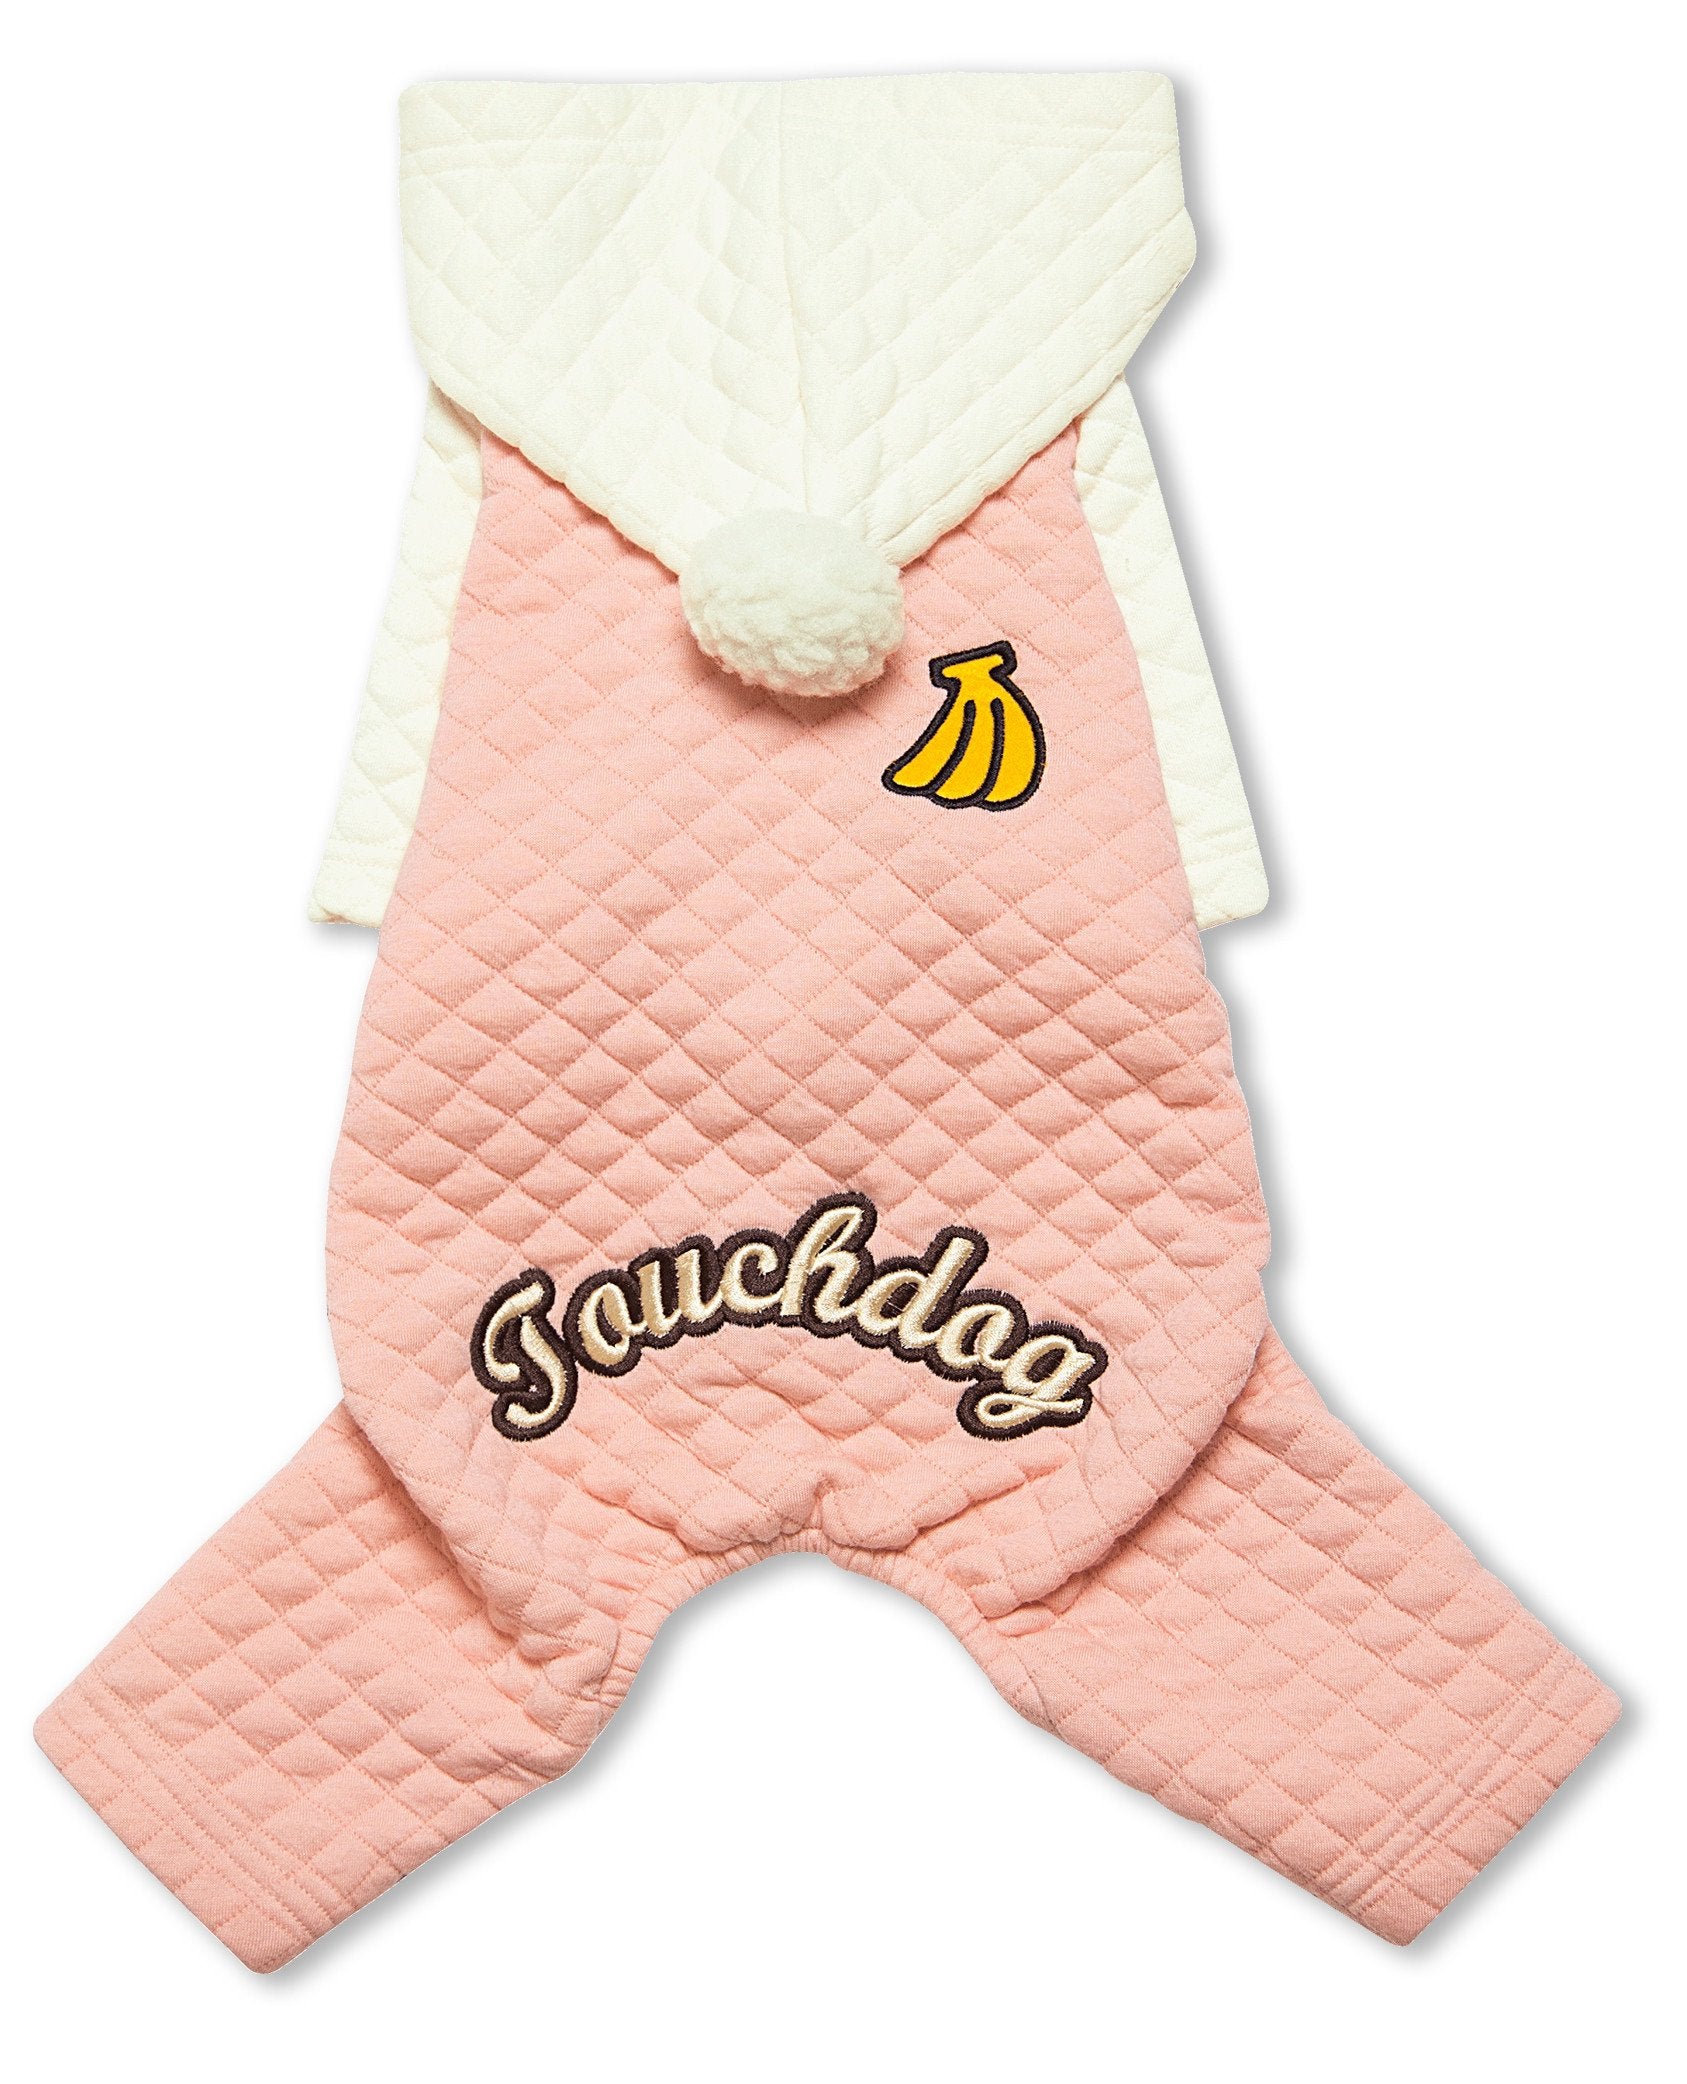 Touchdog Fashion Designer Dog Hooded Sweater - Pink/White - Medium